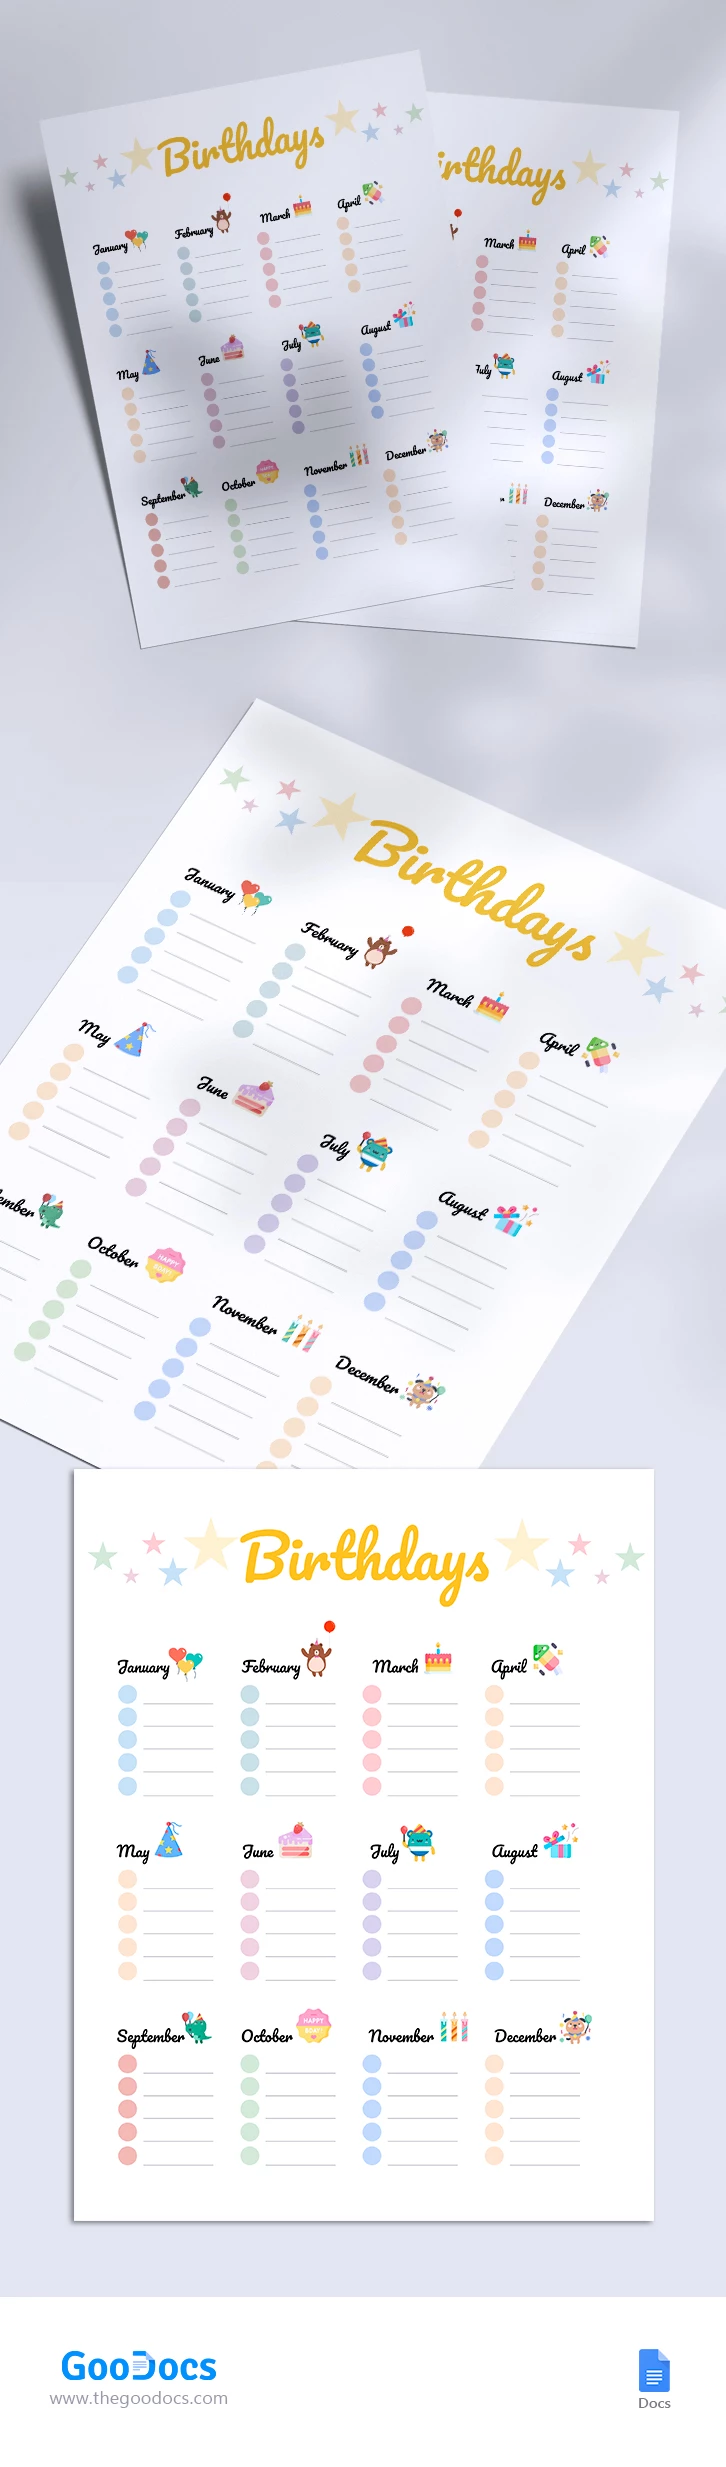 Birthday Calendar - free Google Docs Template - 10067621